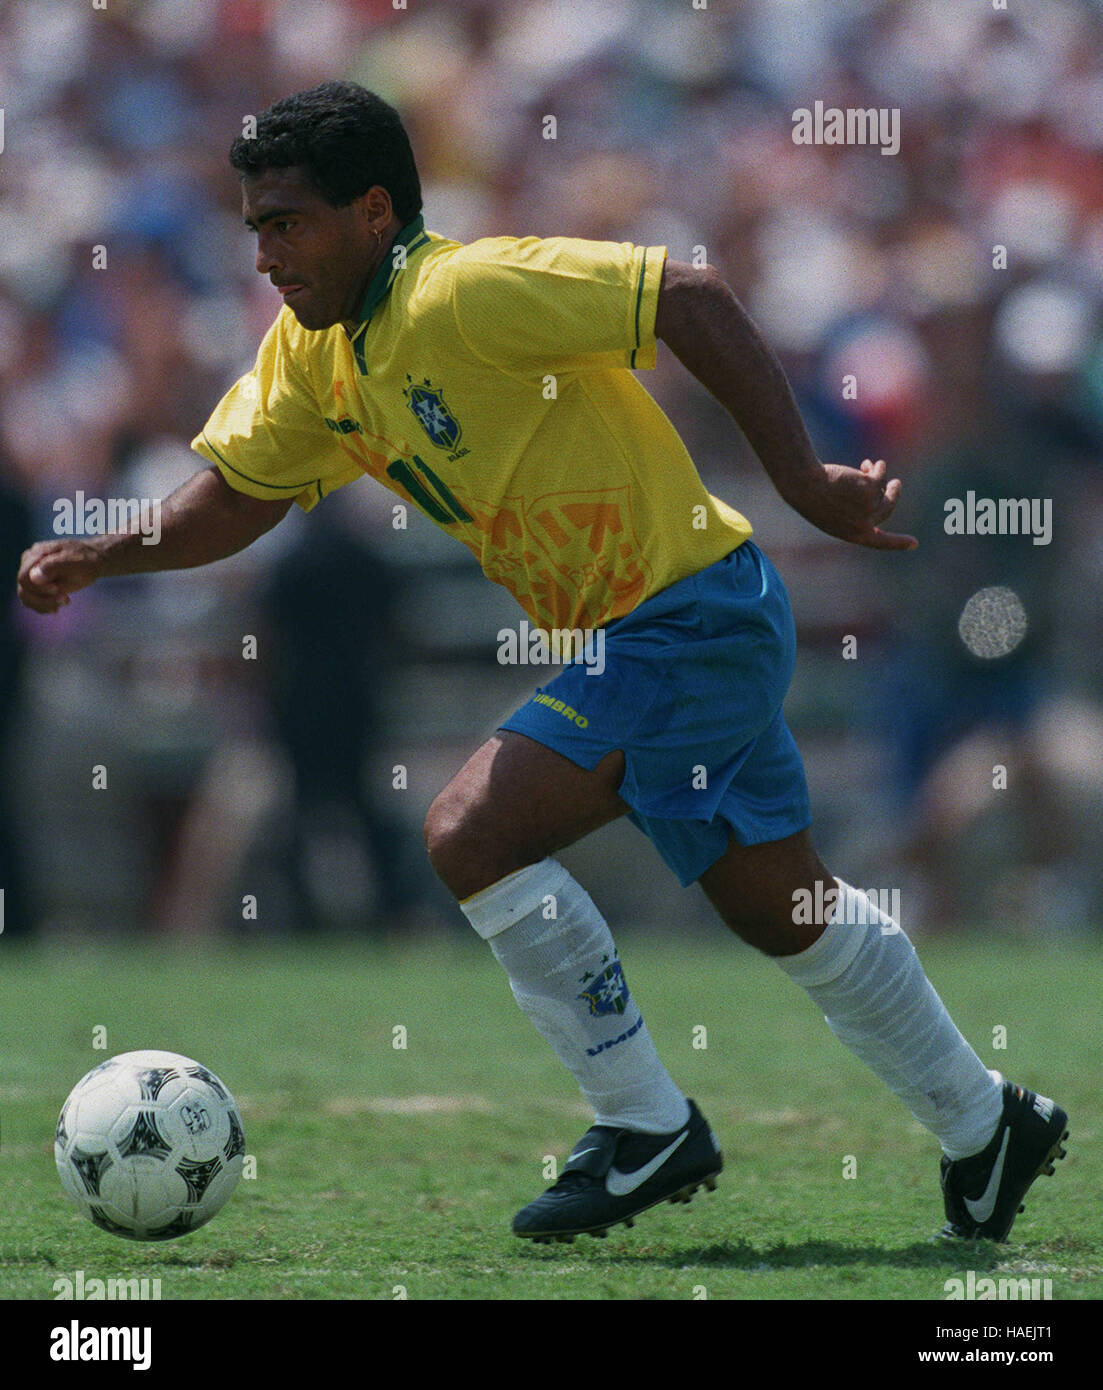 ROMARIO BRAZIL & BARCELONA 17 July 1994 Stock Photo - Alamy